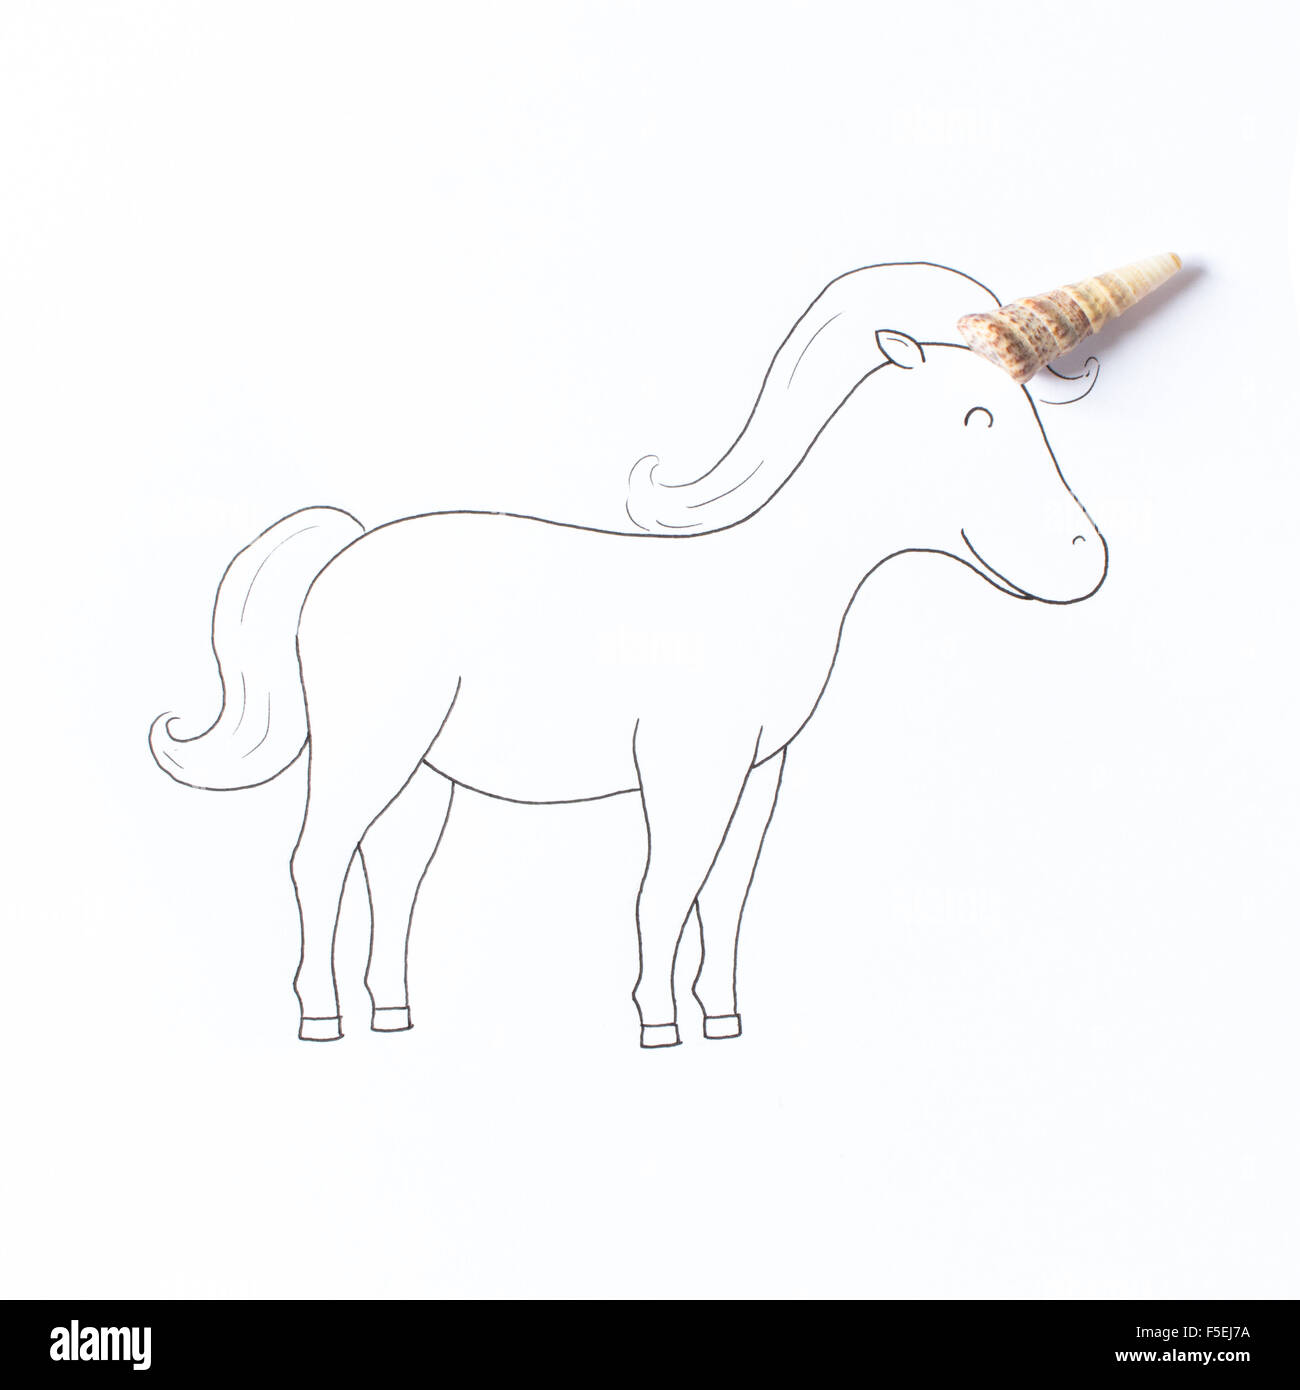 Dibujo conceptual de un unicornio. Foto de stock